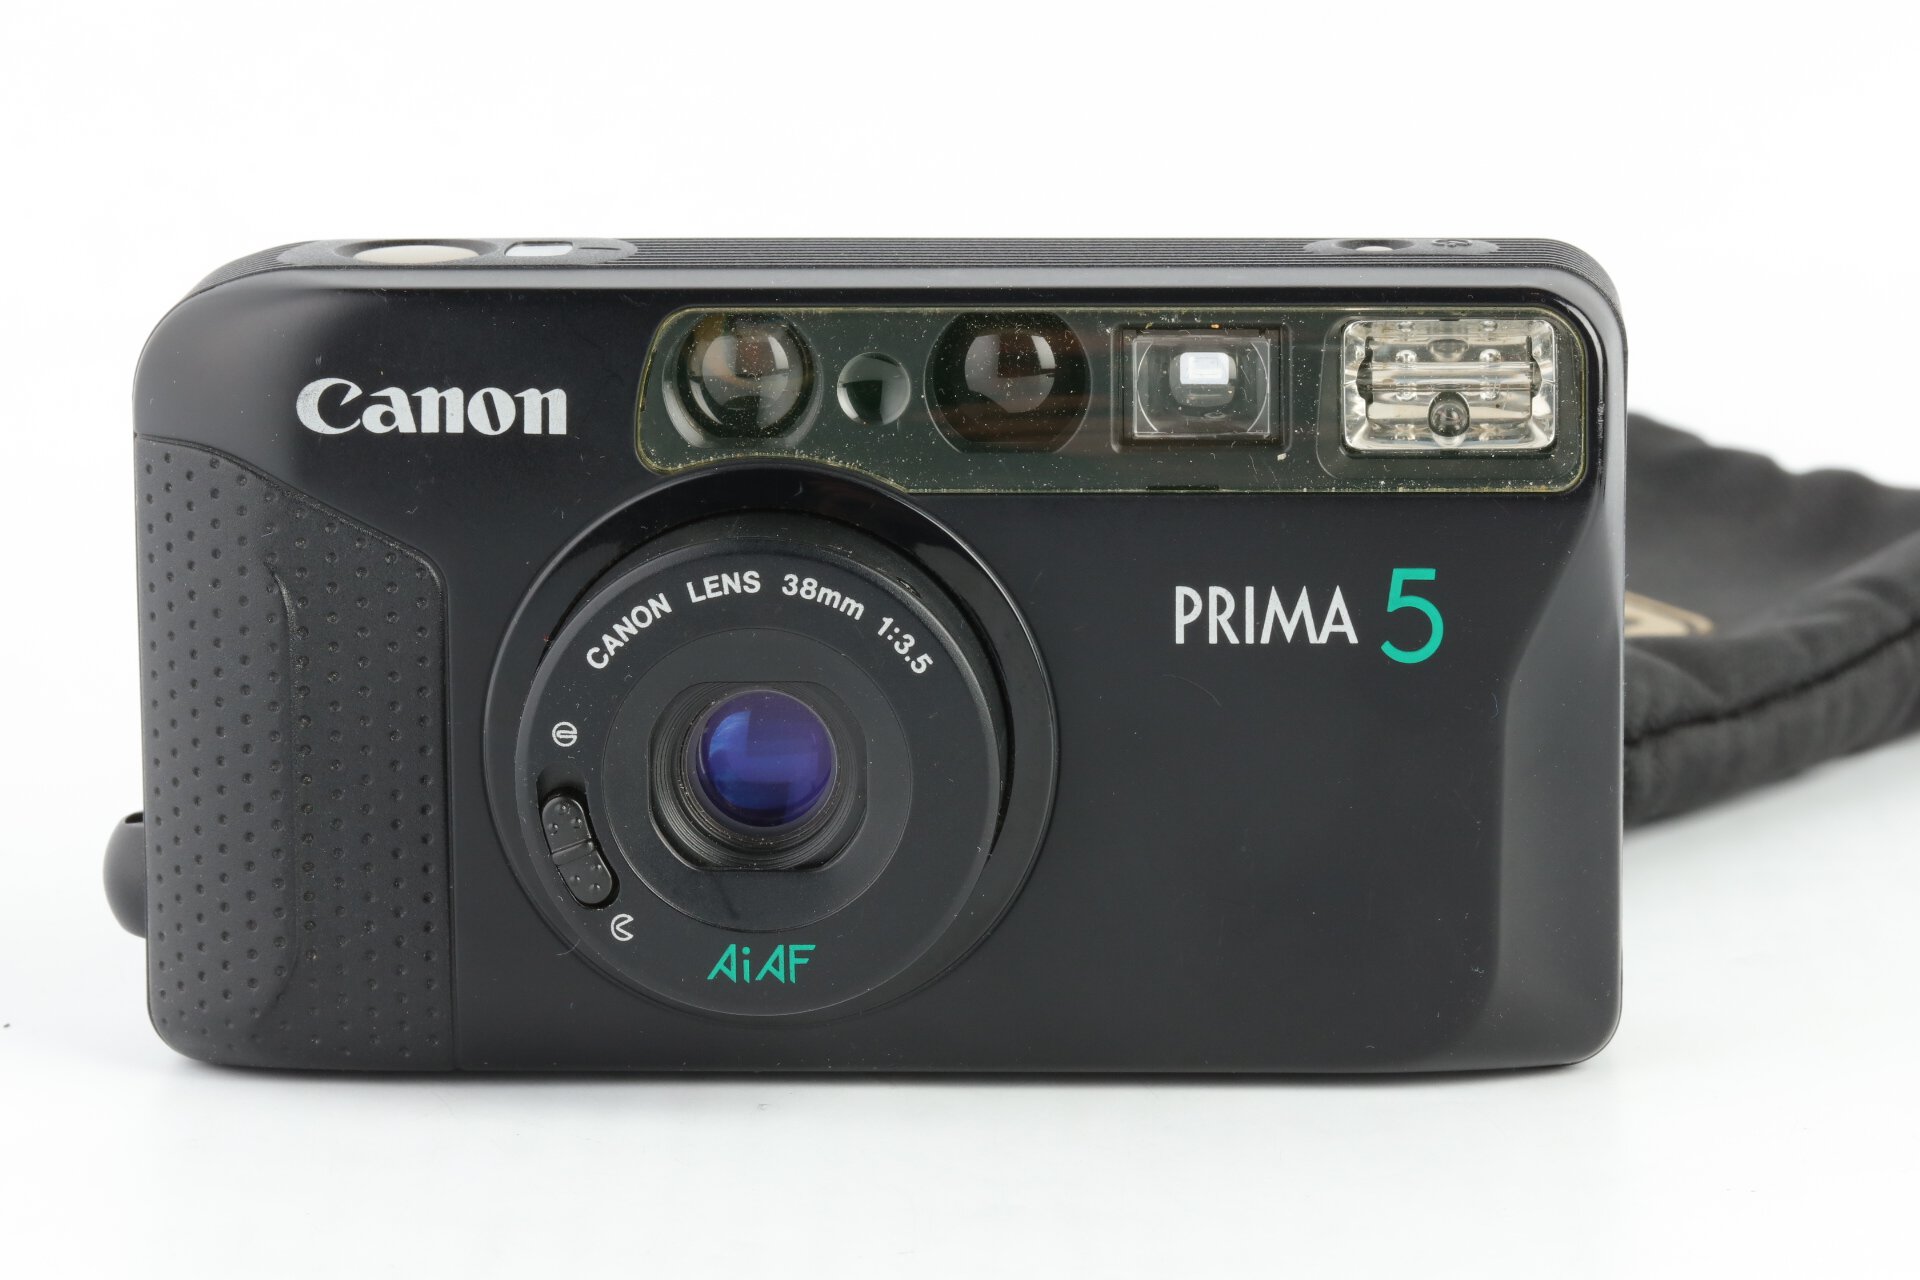 Canon Prima 5 38mm 3,5 analoge Kompaktkamera